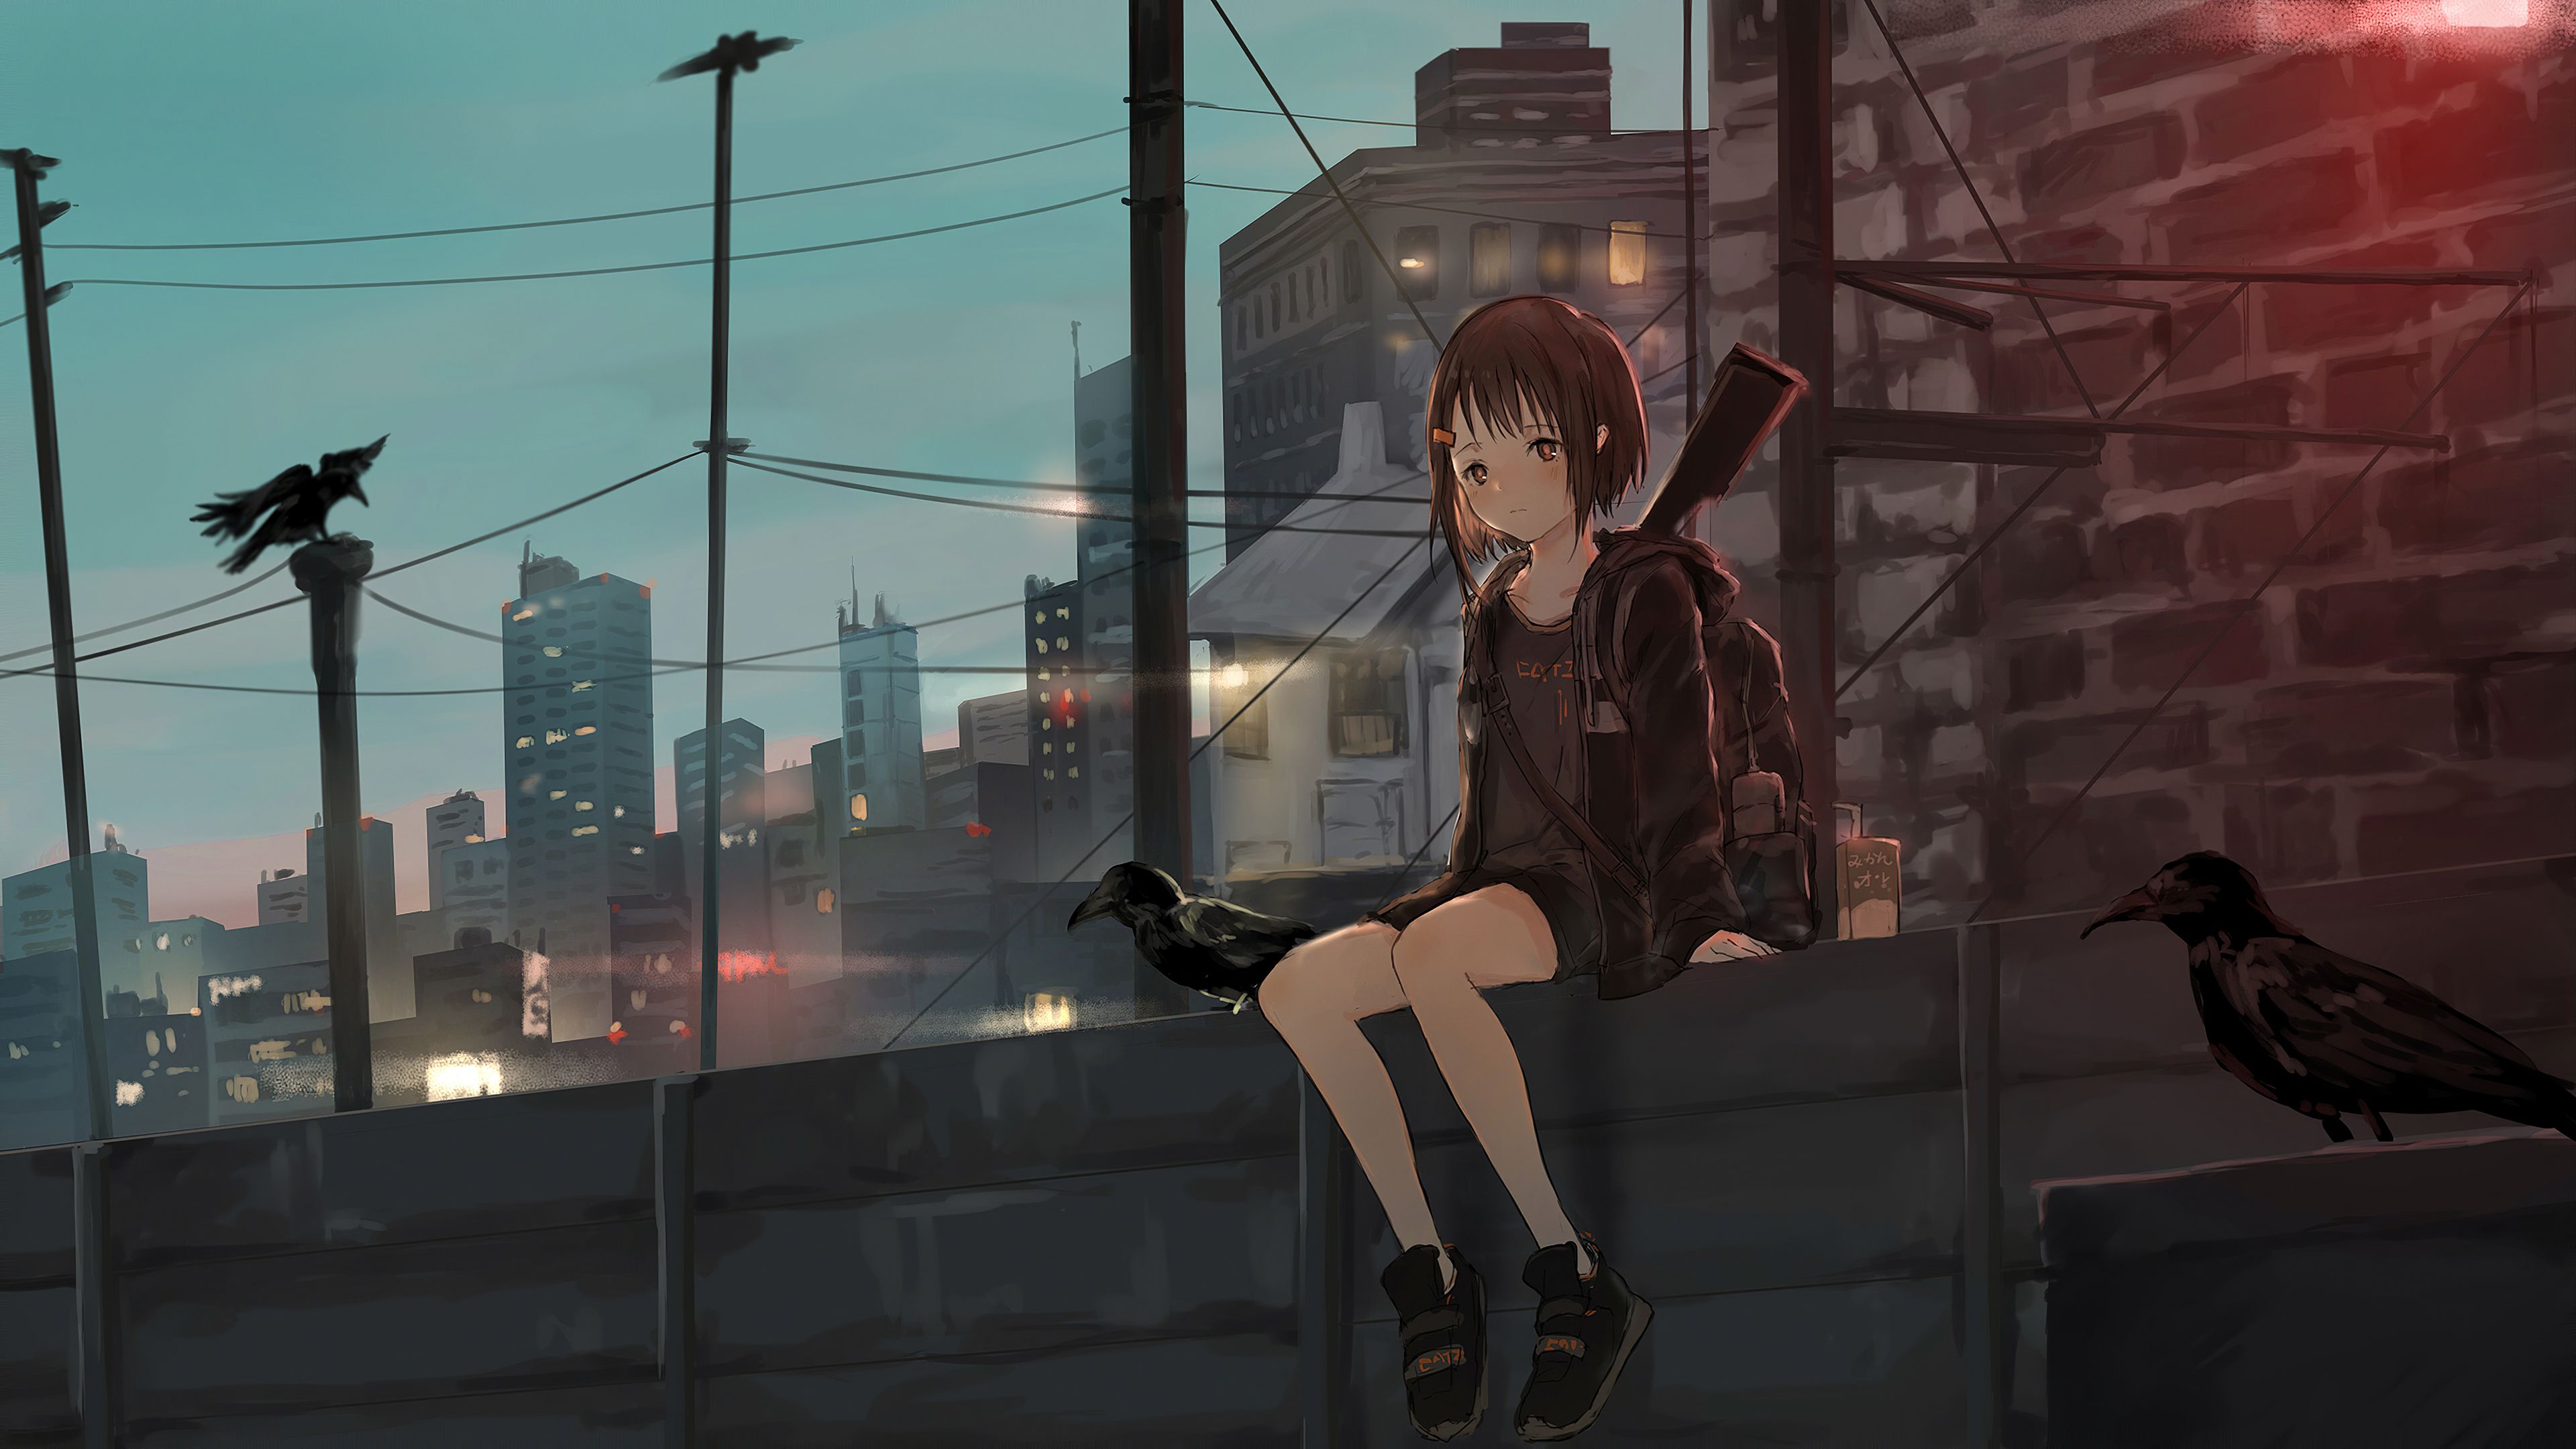 Wallpaper 4k Anime Girl Sitting Alone Roof Sad